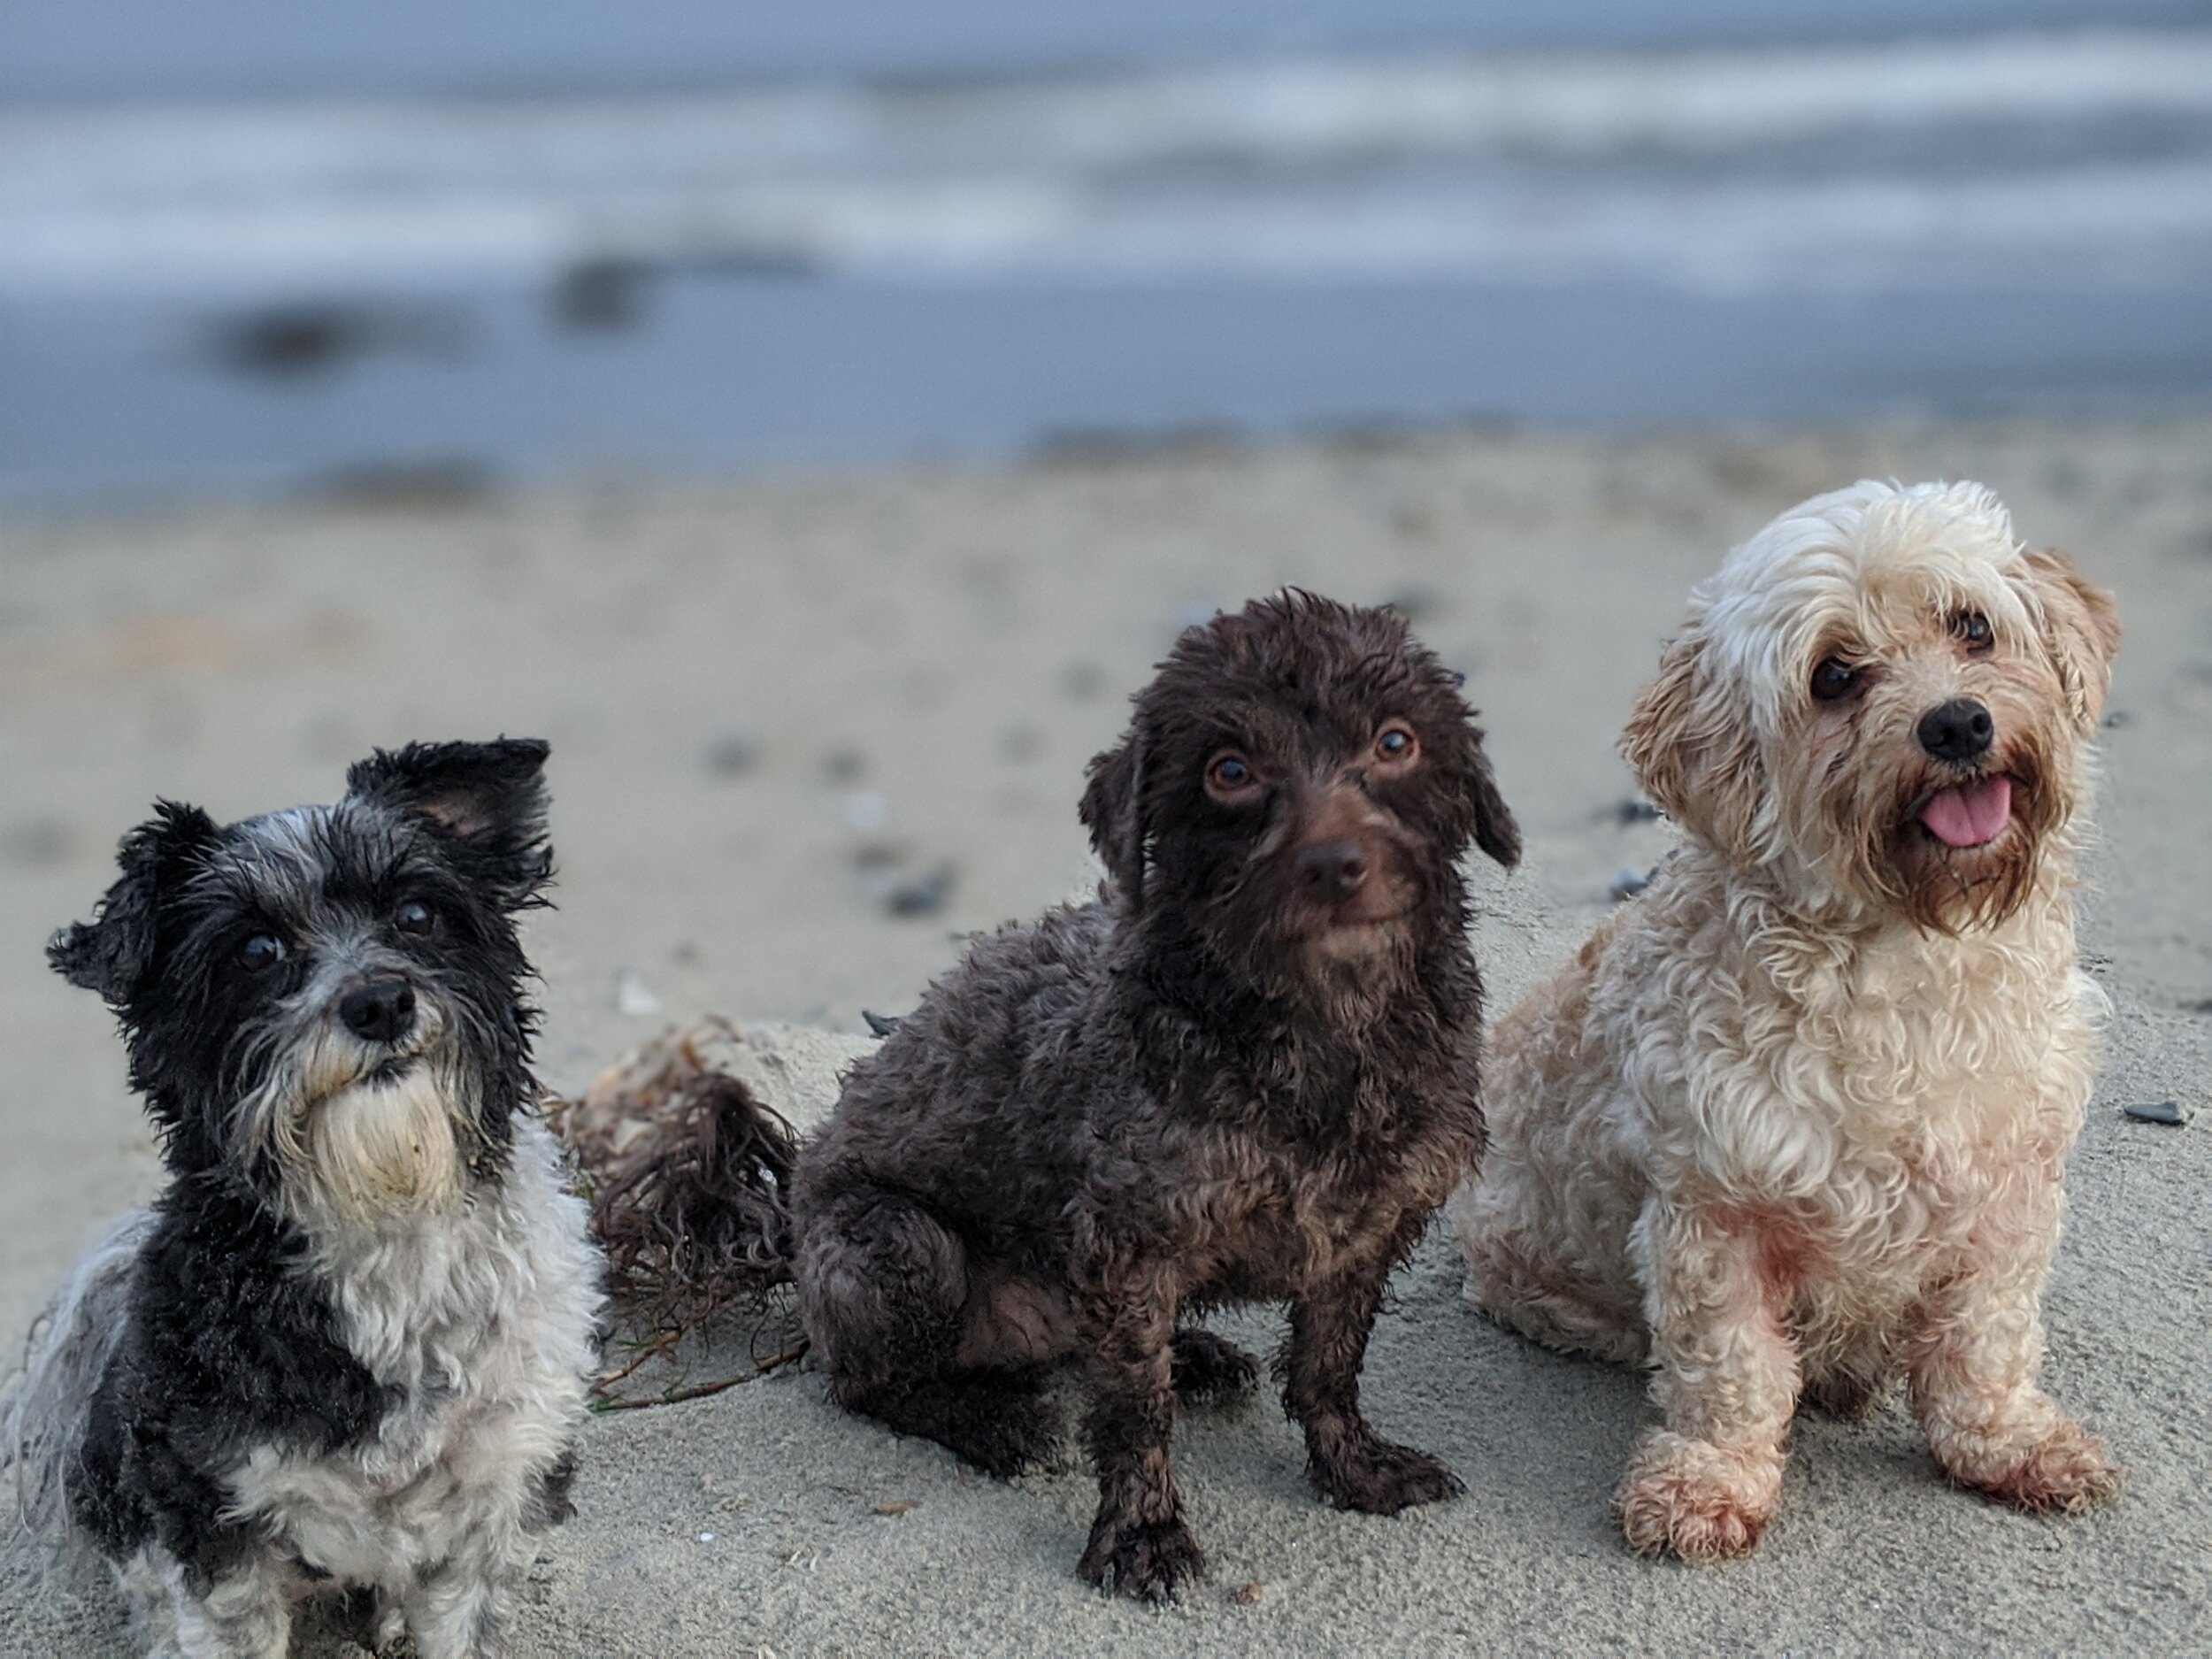  Sammi, Mojo, and Bonnie on the beach in Texas. Show coats optional.  